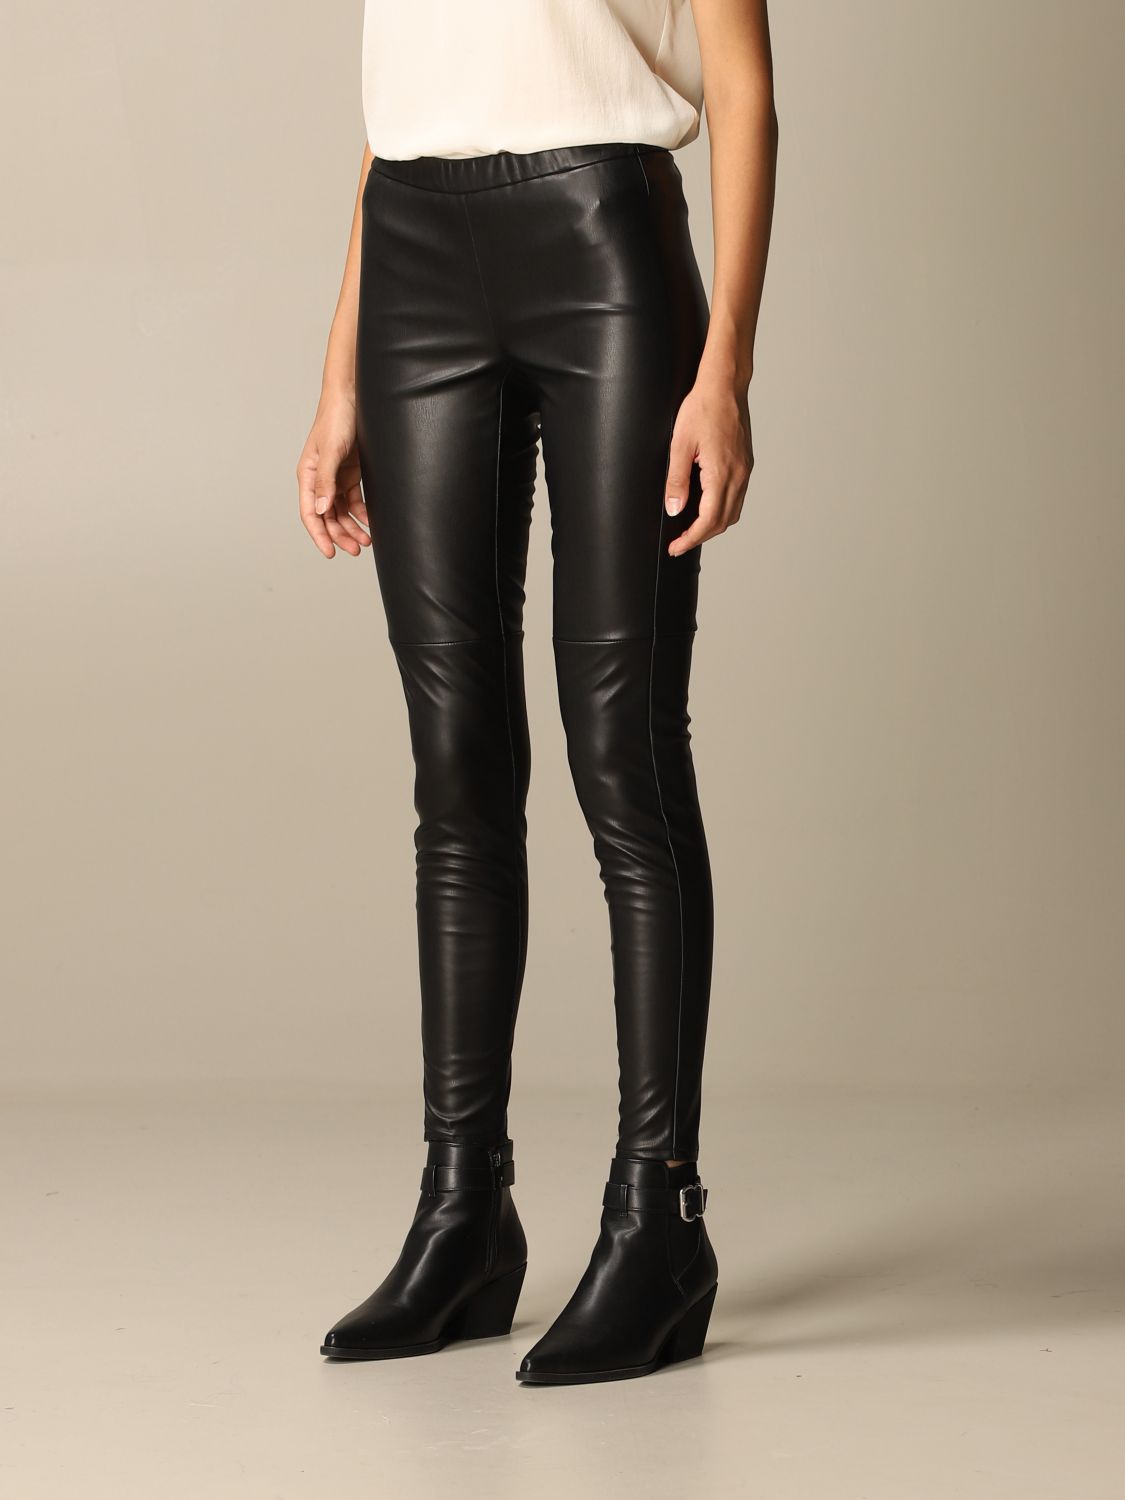 MICHAEL KORS: Michael leggings in synthetic leather - Black | Michael Kors  pants MB93GJXBFS online on 